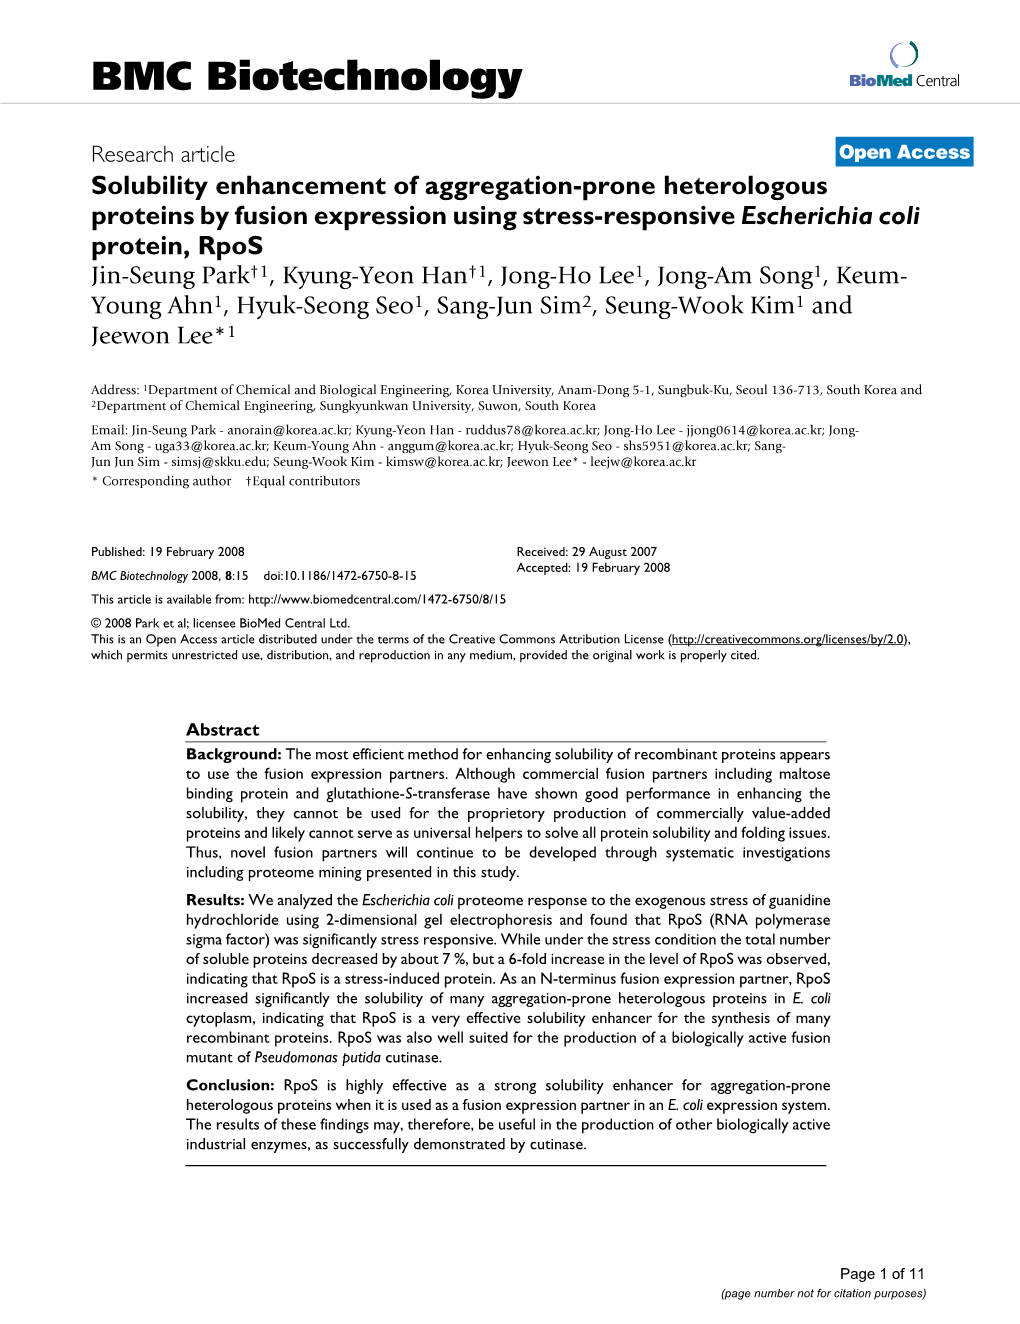 Solubility Enhancement of Aggregation-Prone Heterologous